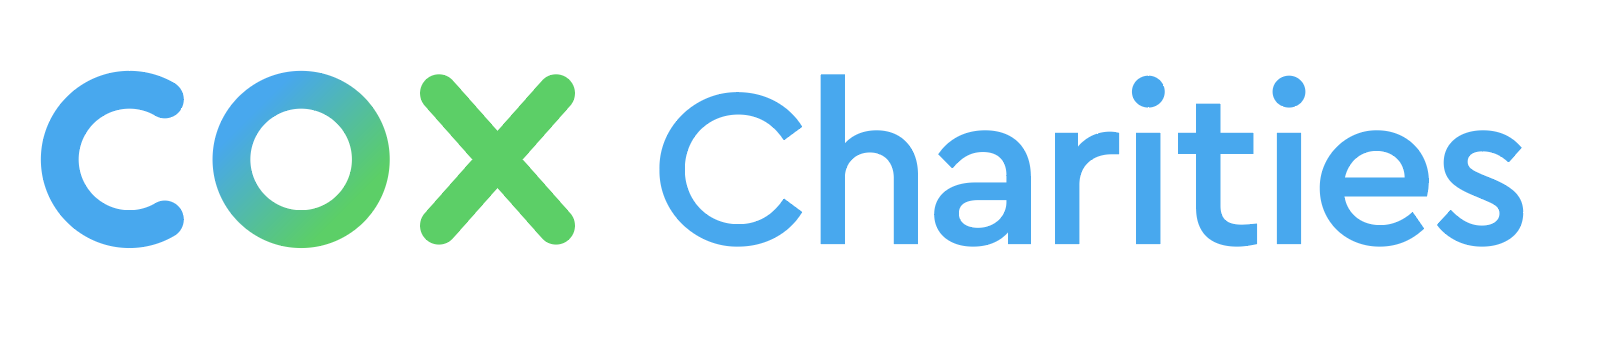 Cox Charities Logo Med